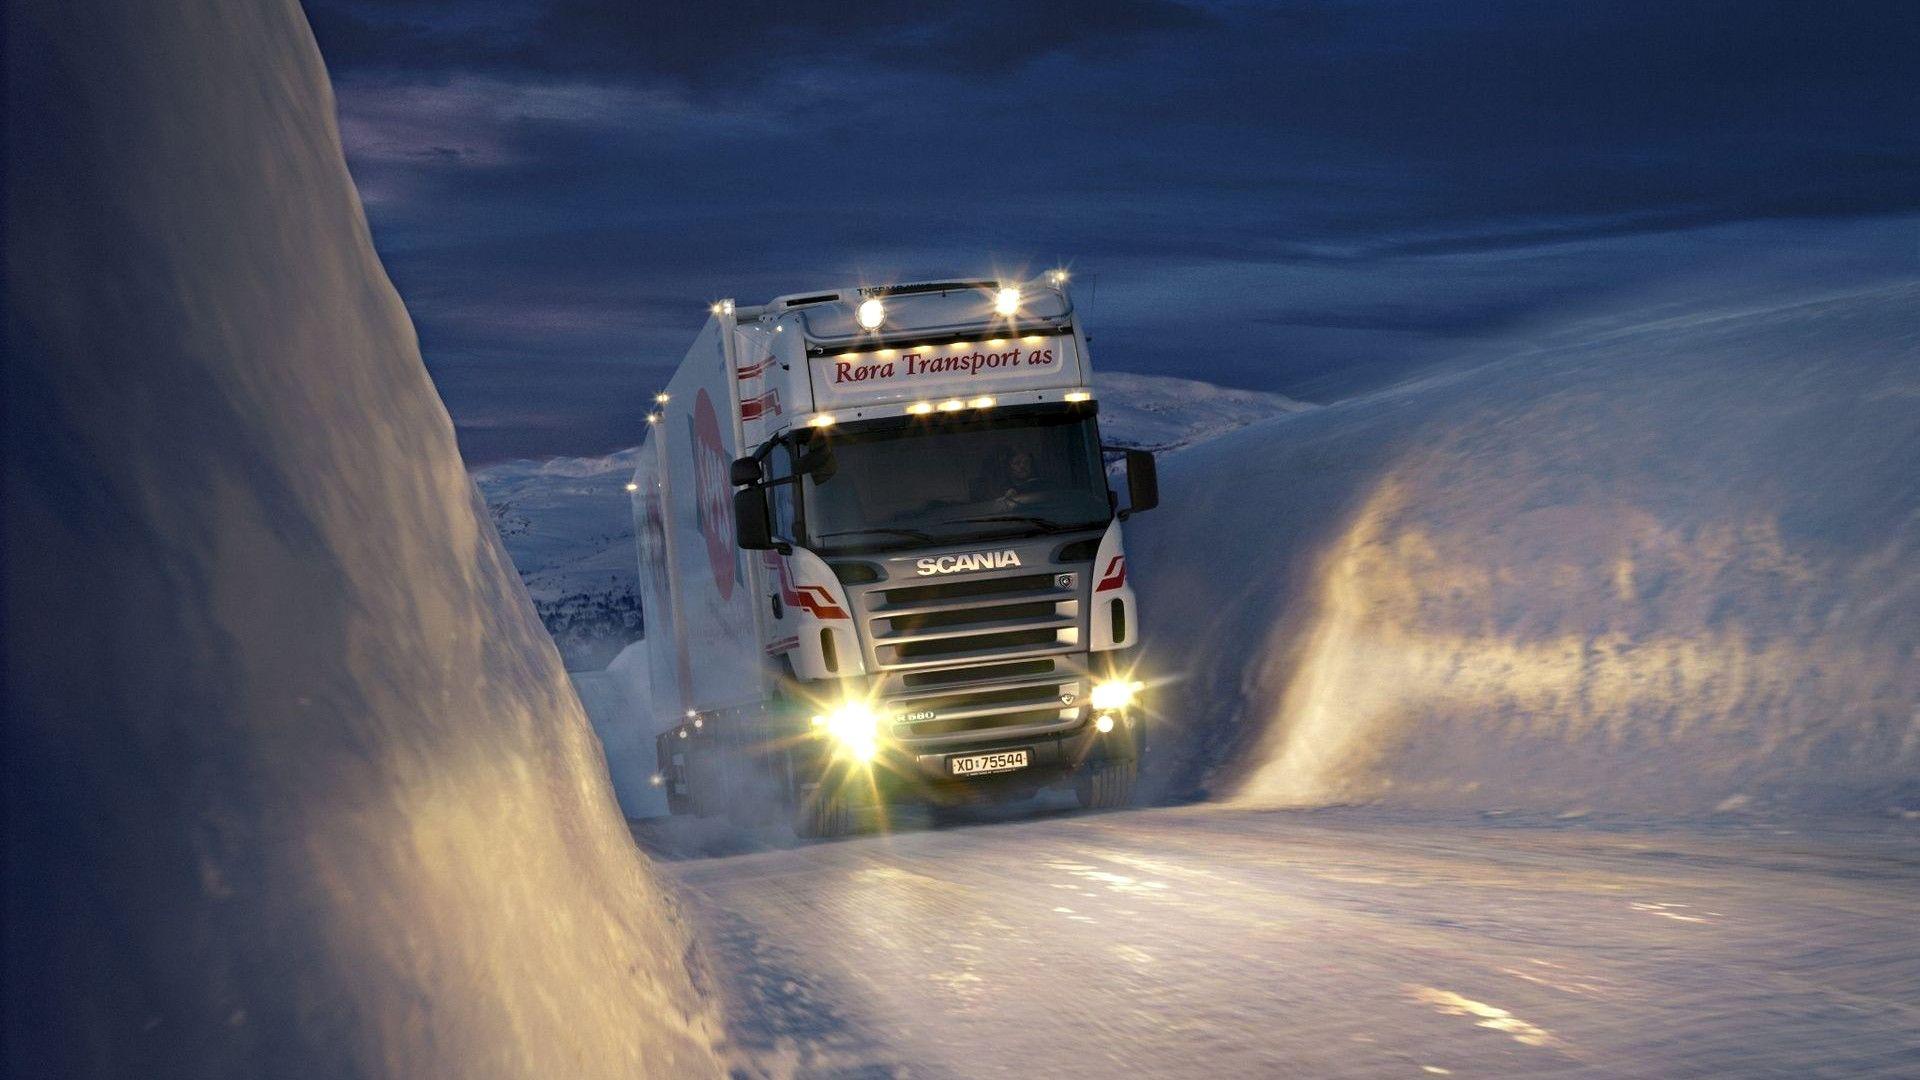 Scania Truck on Snow Road Wallpaper, iPhone Wallpaper, Facebook